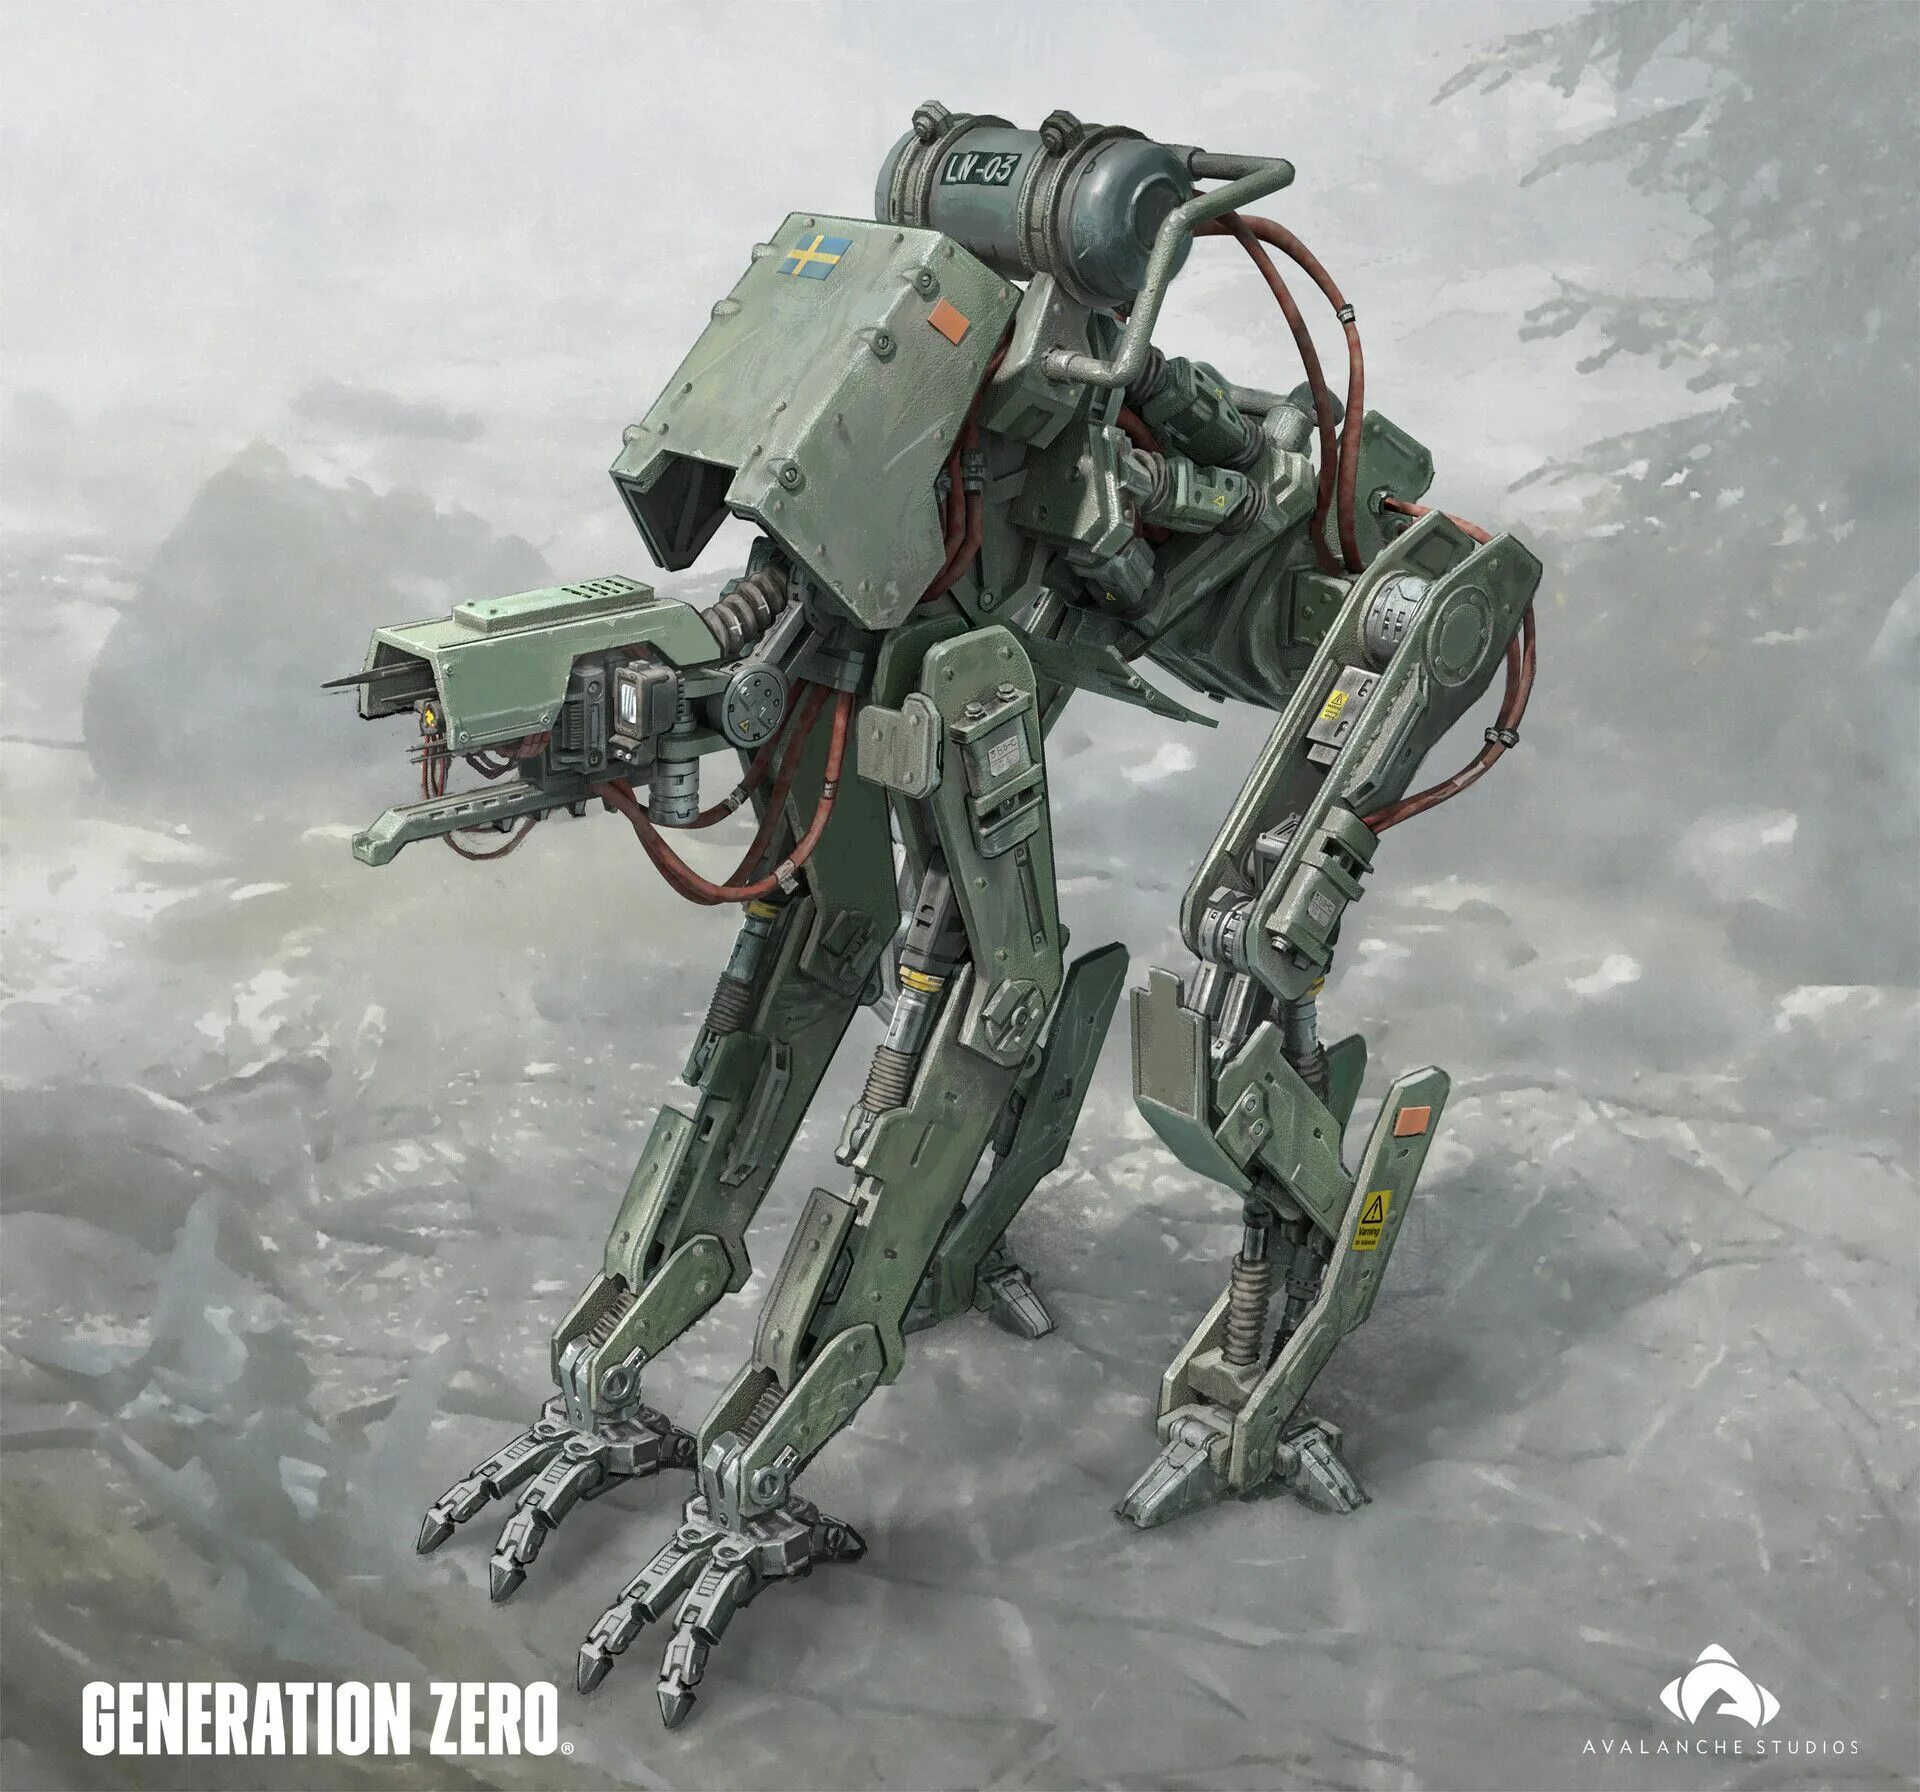 Генерейшен Зеро. Генератион Зеро роботы. Generation Zero охотник робот. Робот Жнец Generation Zero. Generation robot